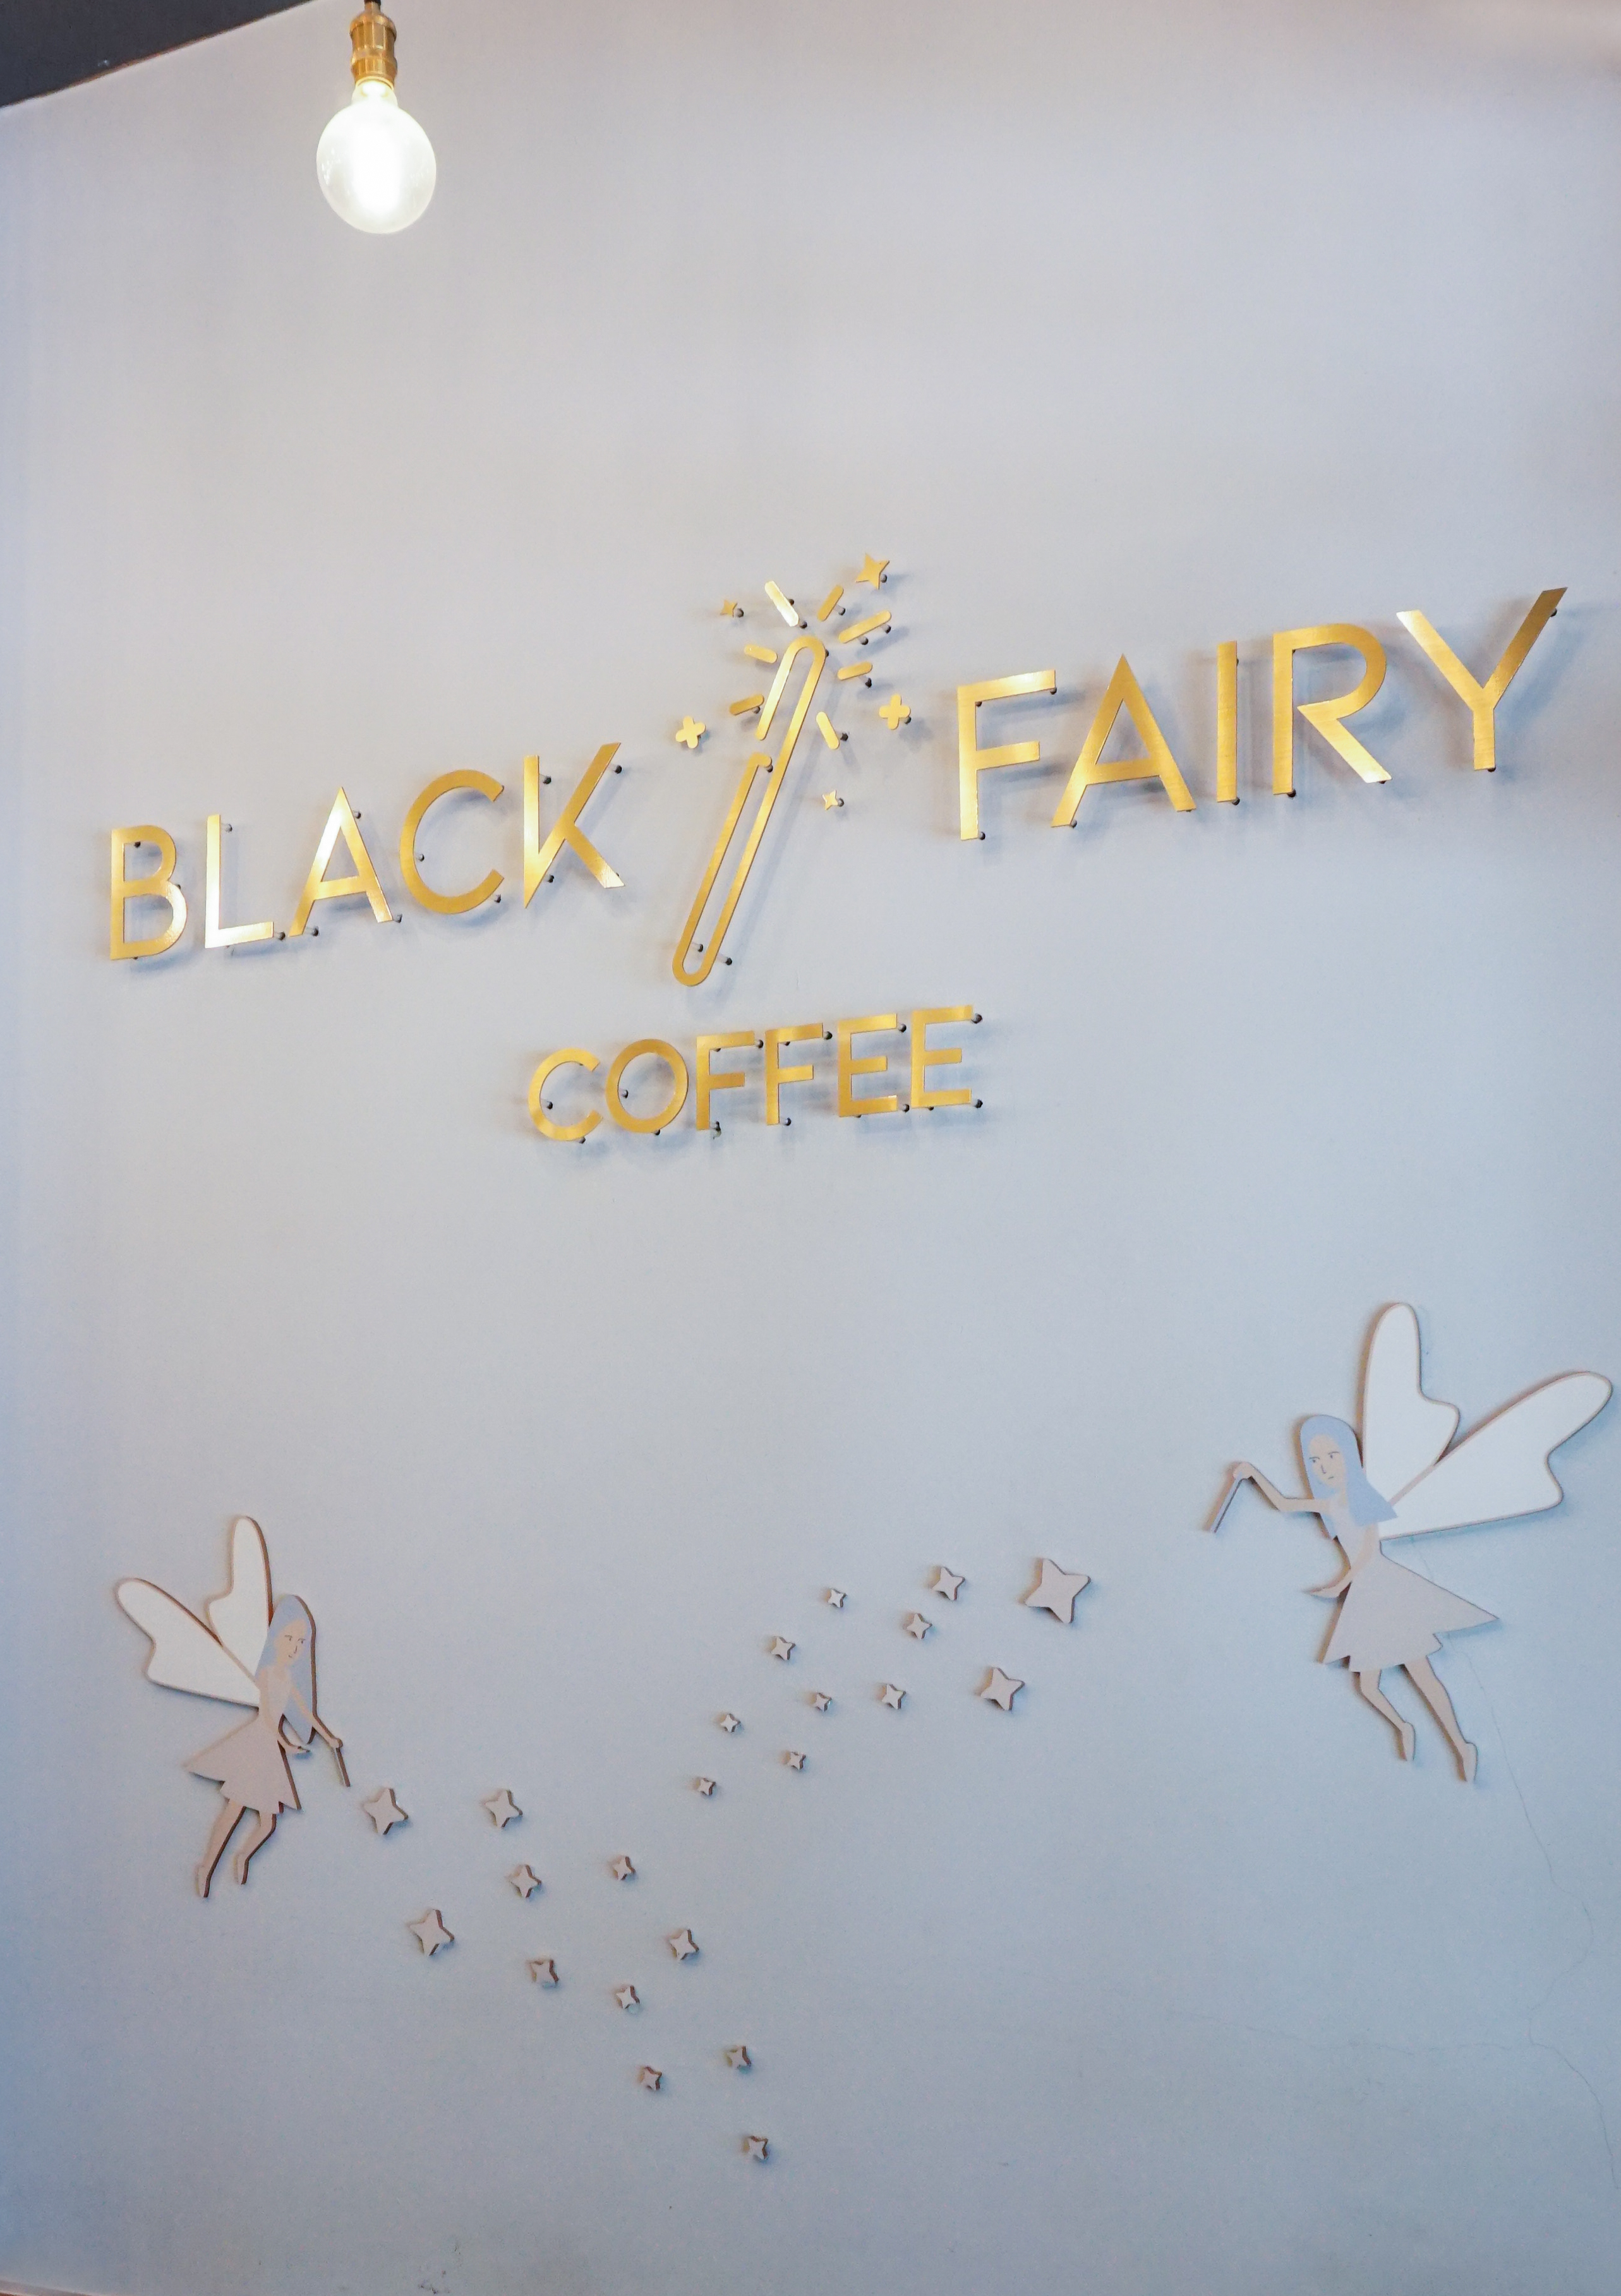 Black Fairy Coffee